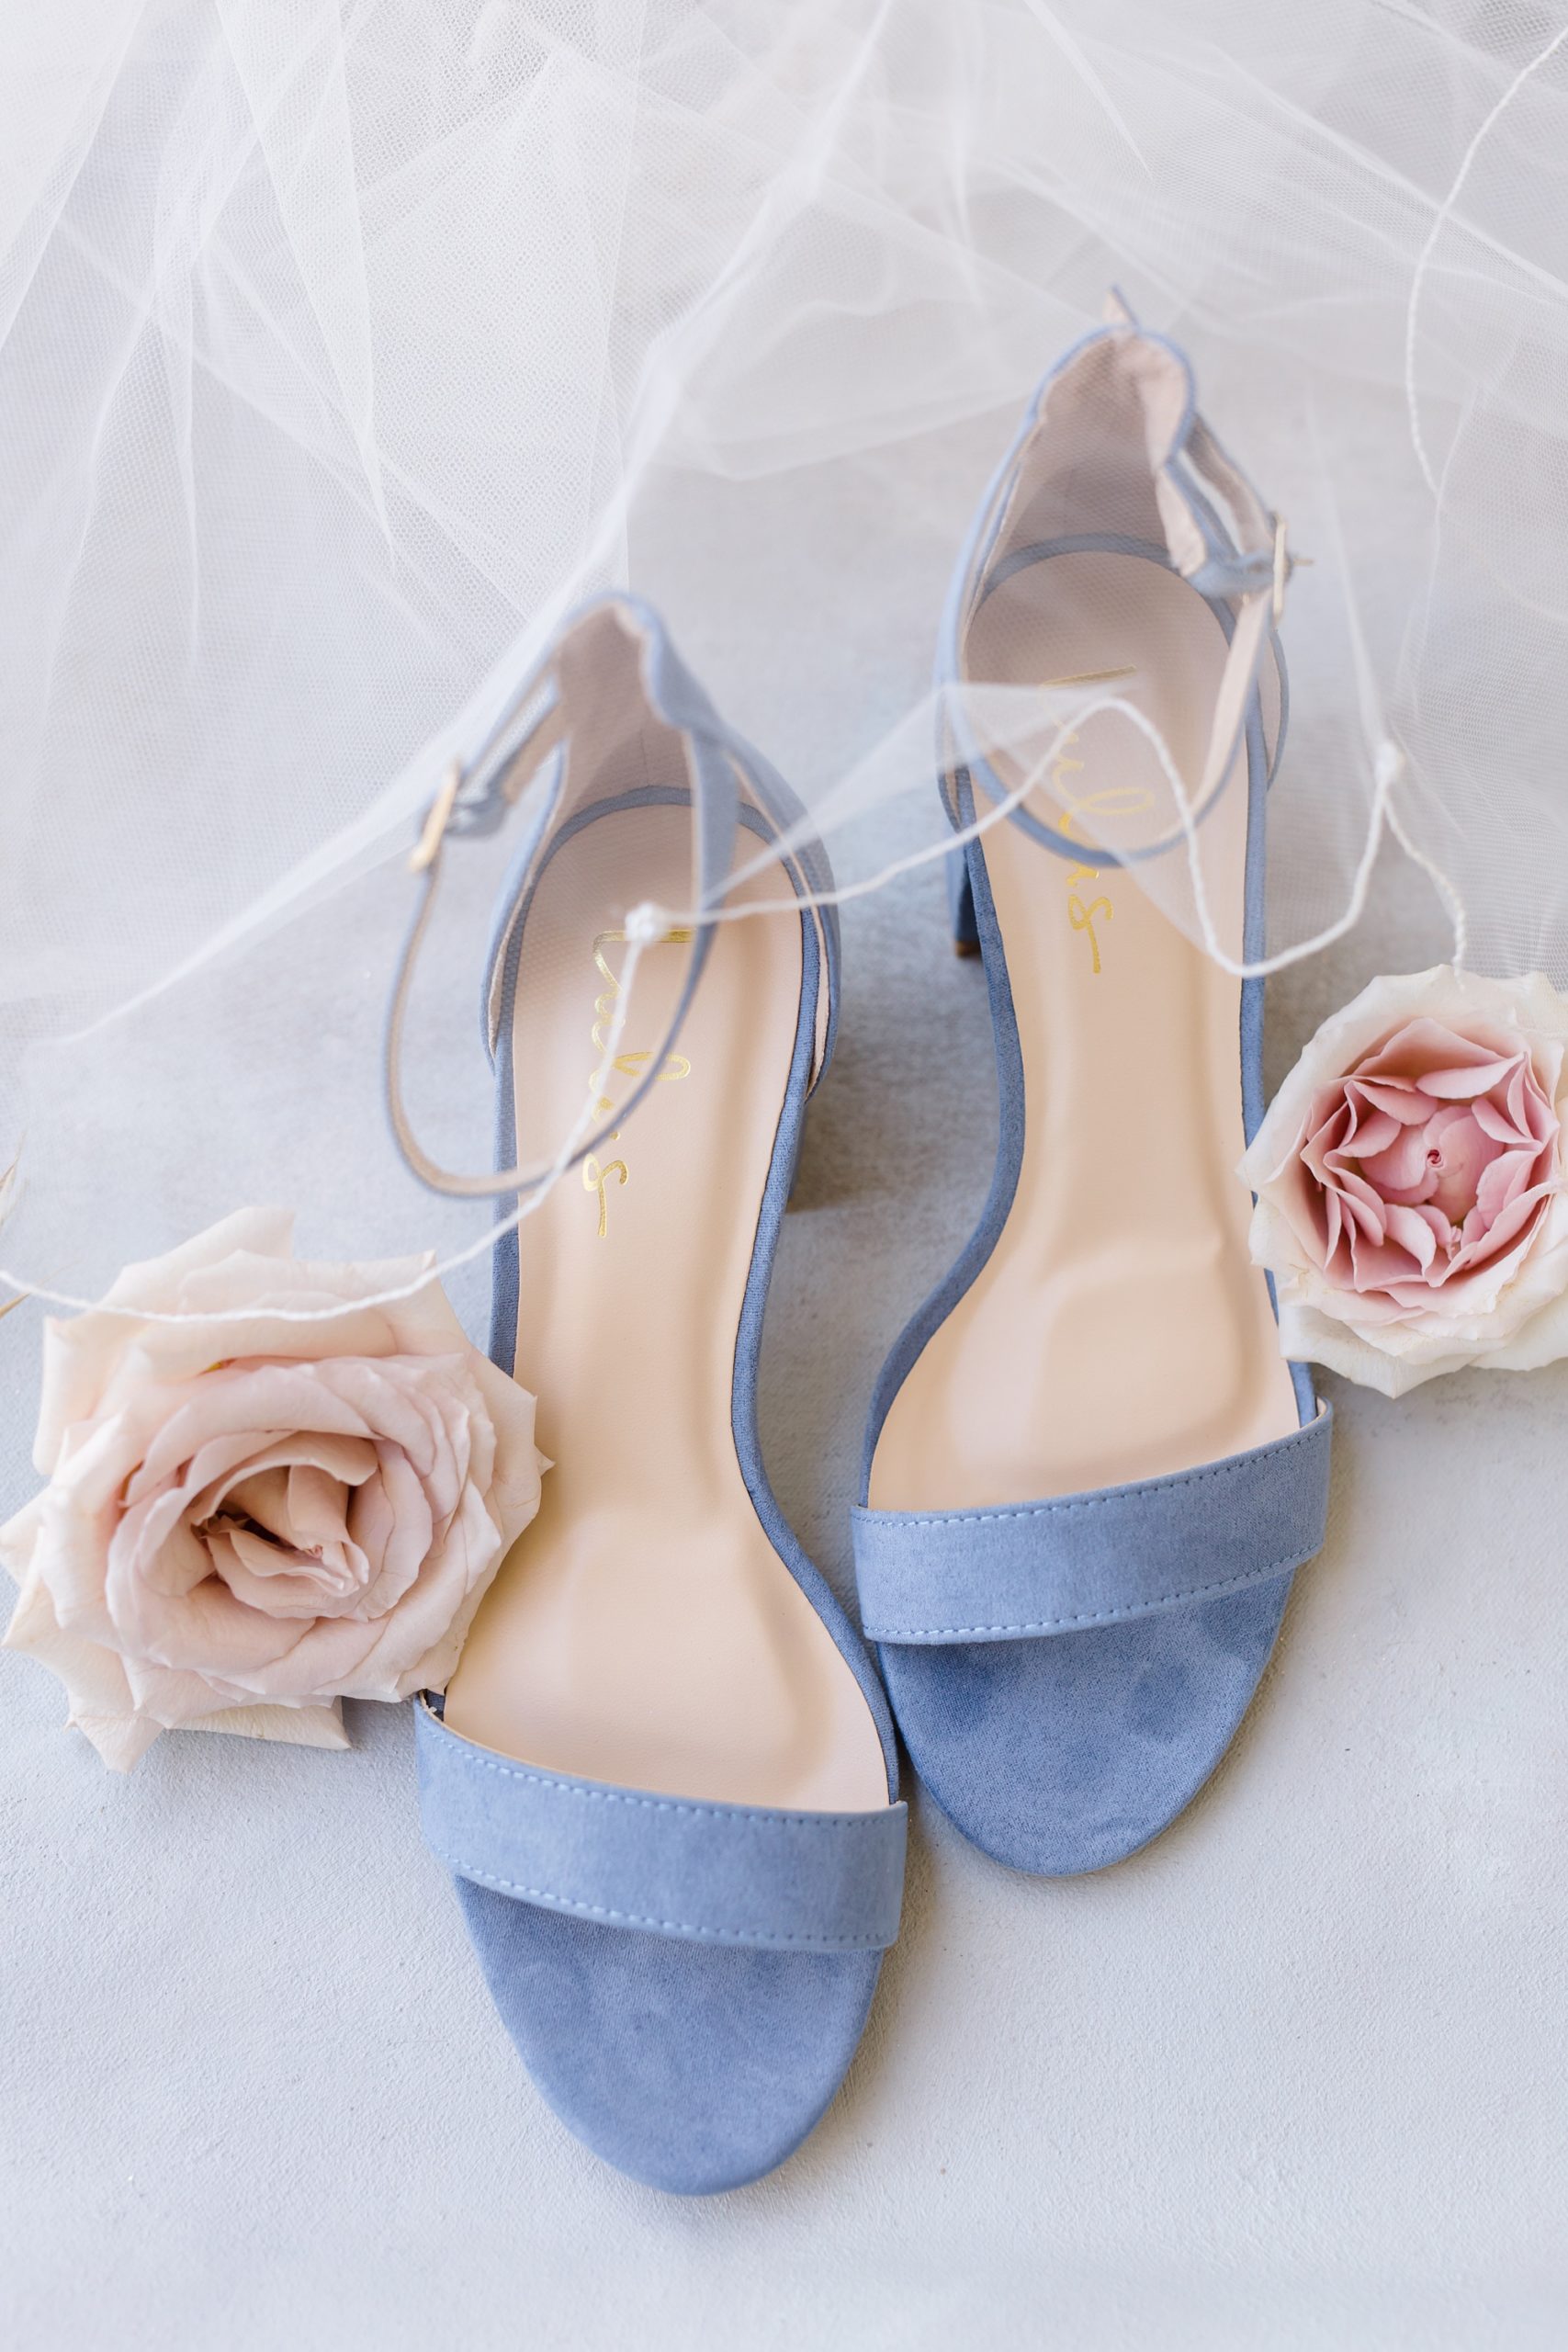 blue shoes for Texas bride